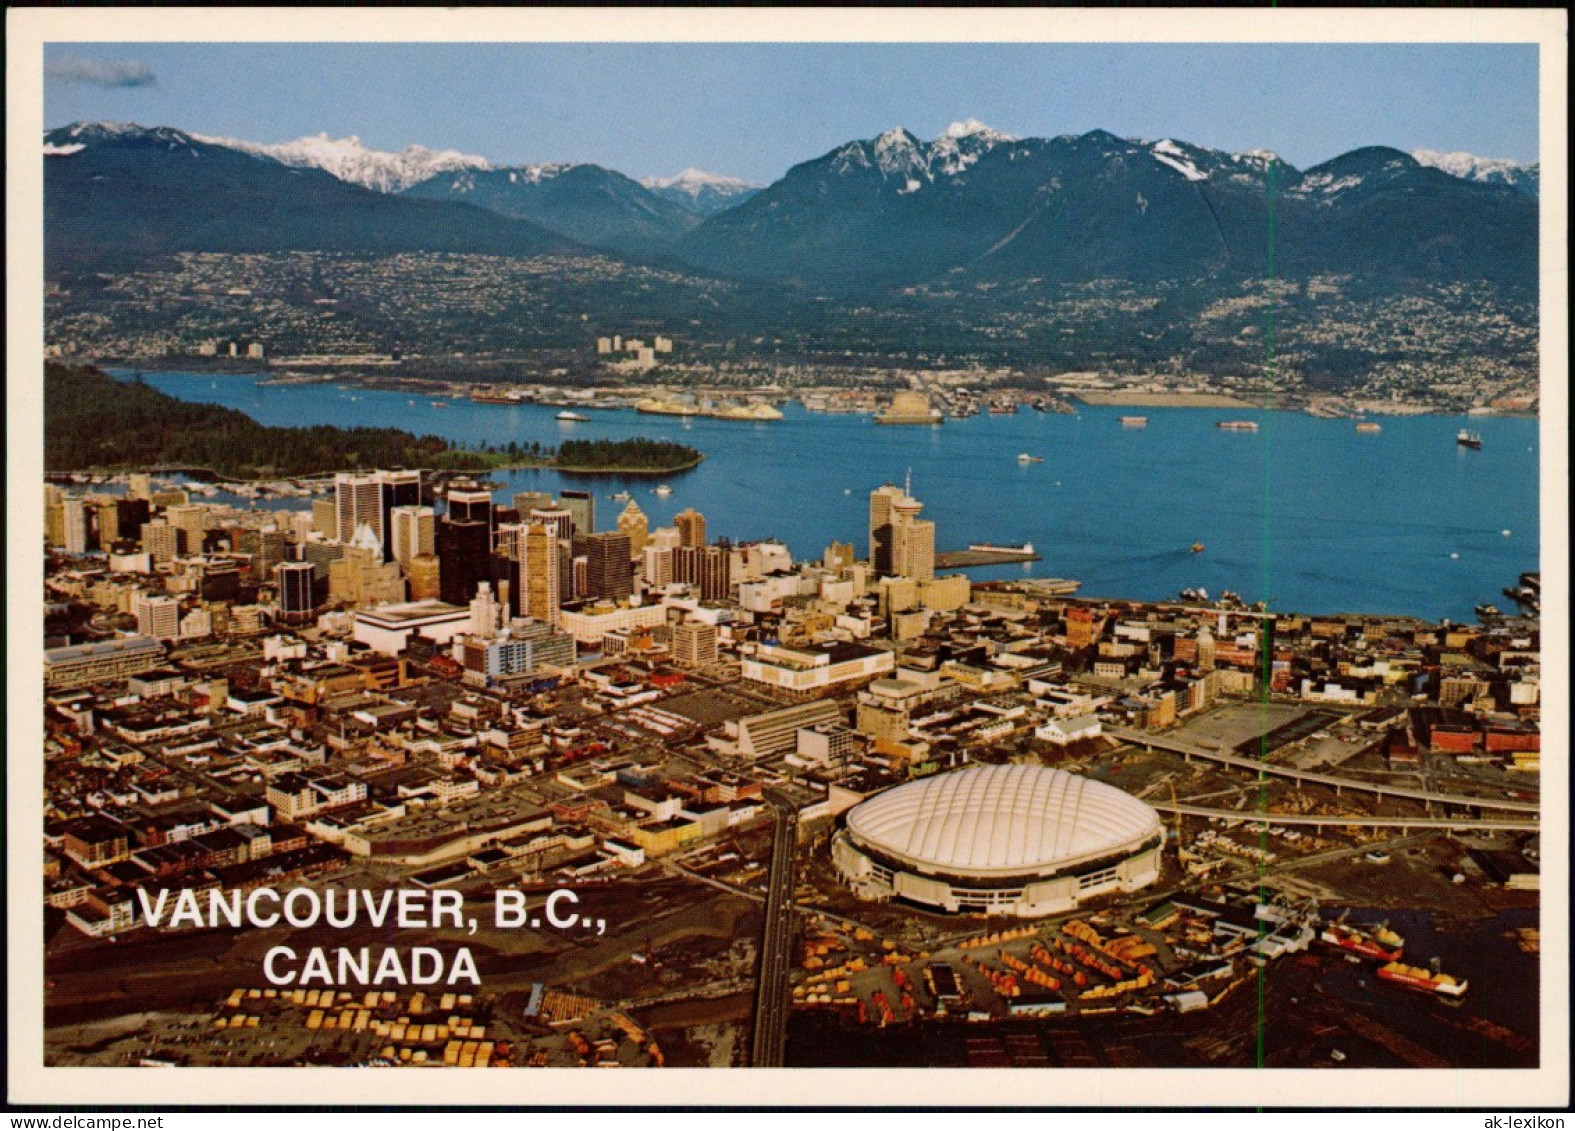 Postcard Vancouver Luftaufnahme Luftbild Areal View 1978 - Vancouver